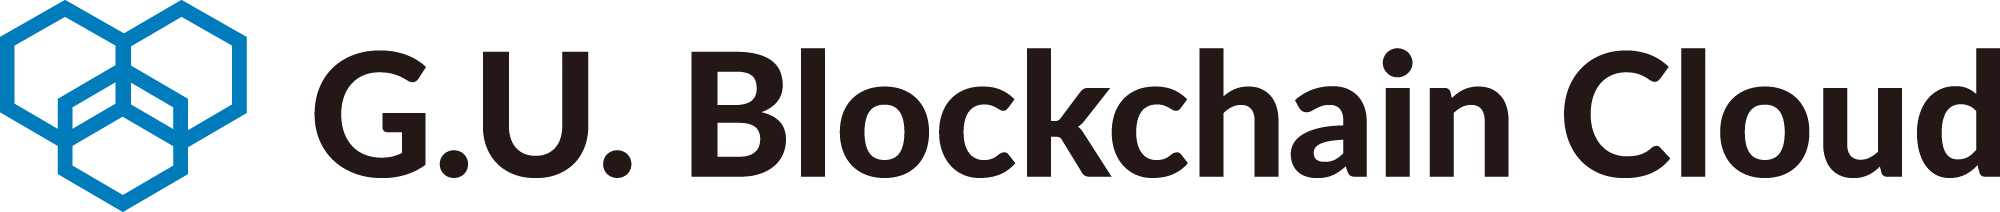 G.U. Blockchain Cloud-logo